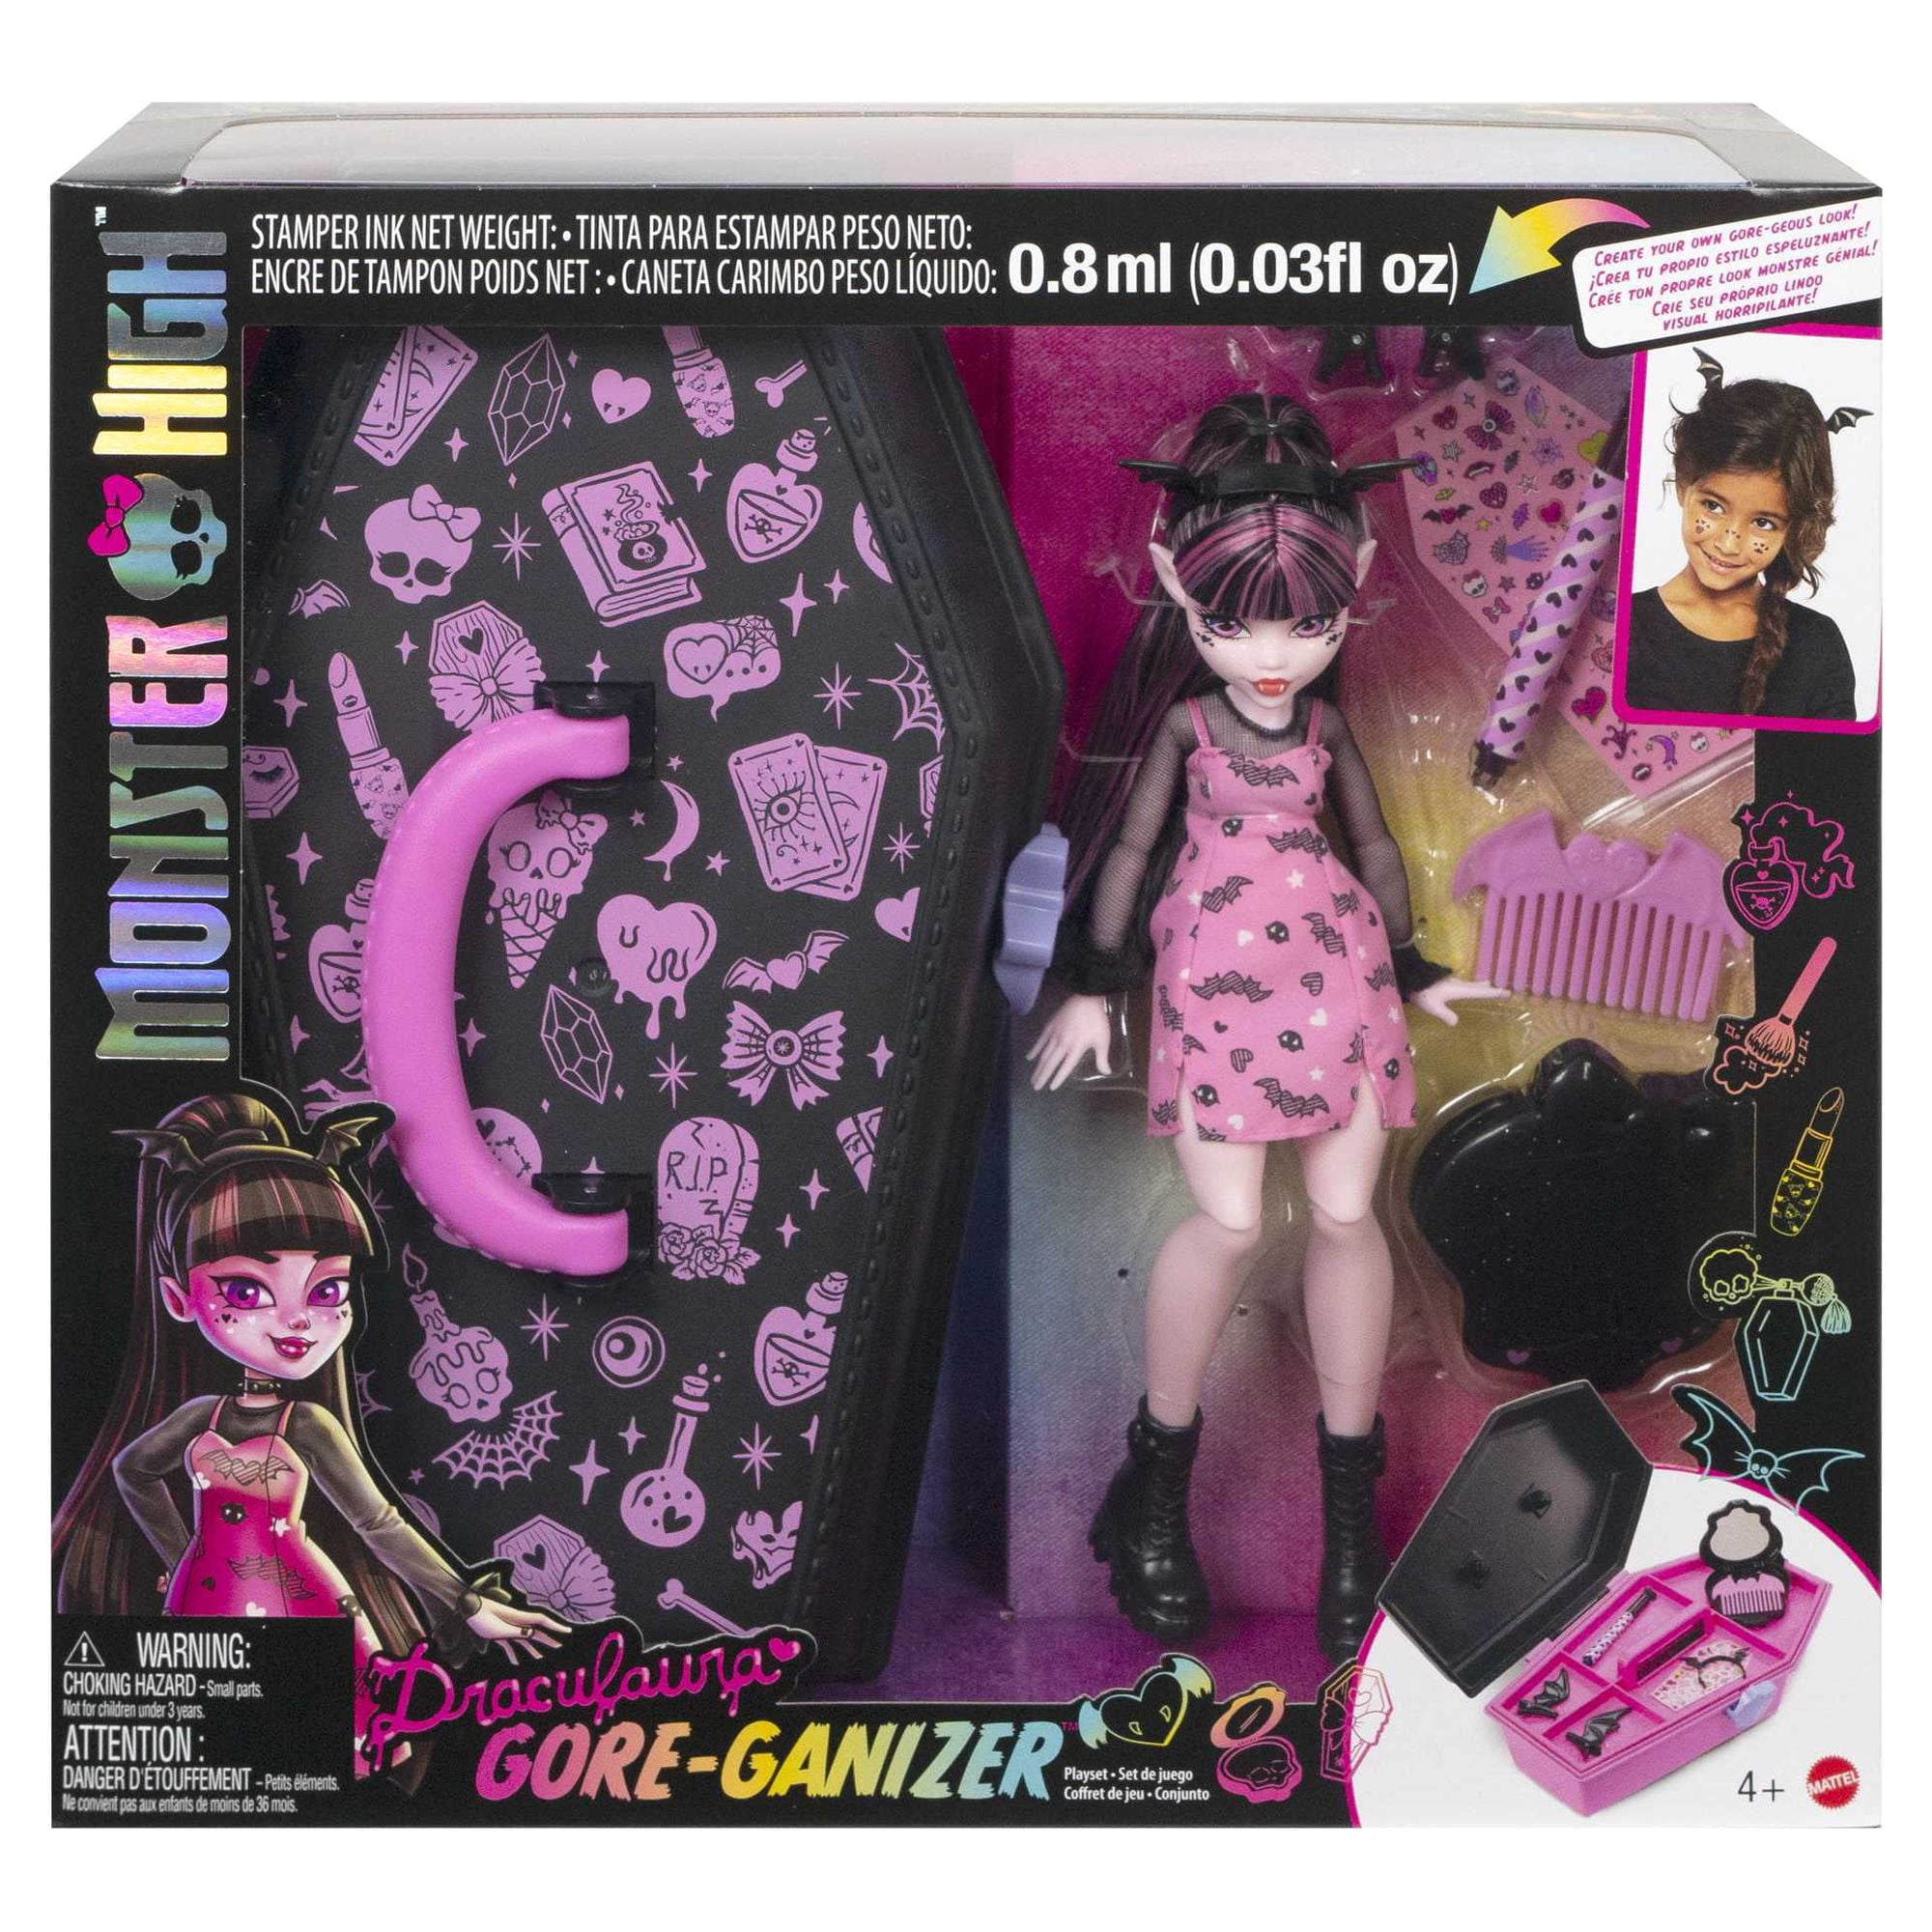 Monster High Draculaura G1 Playsets Doll